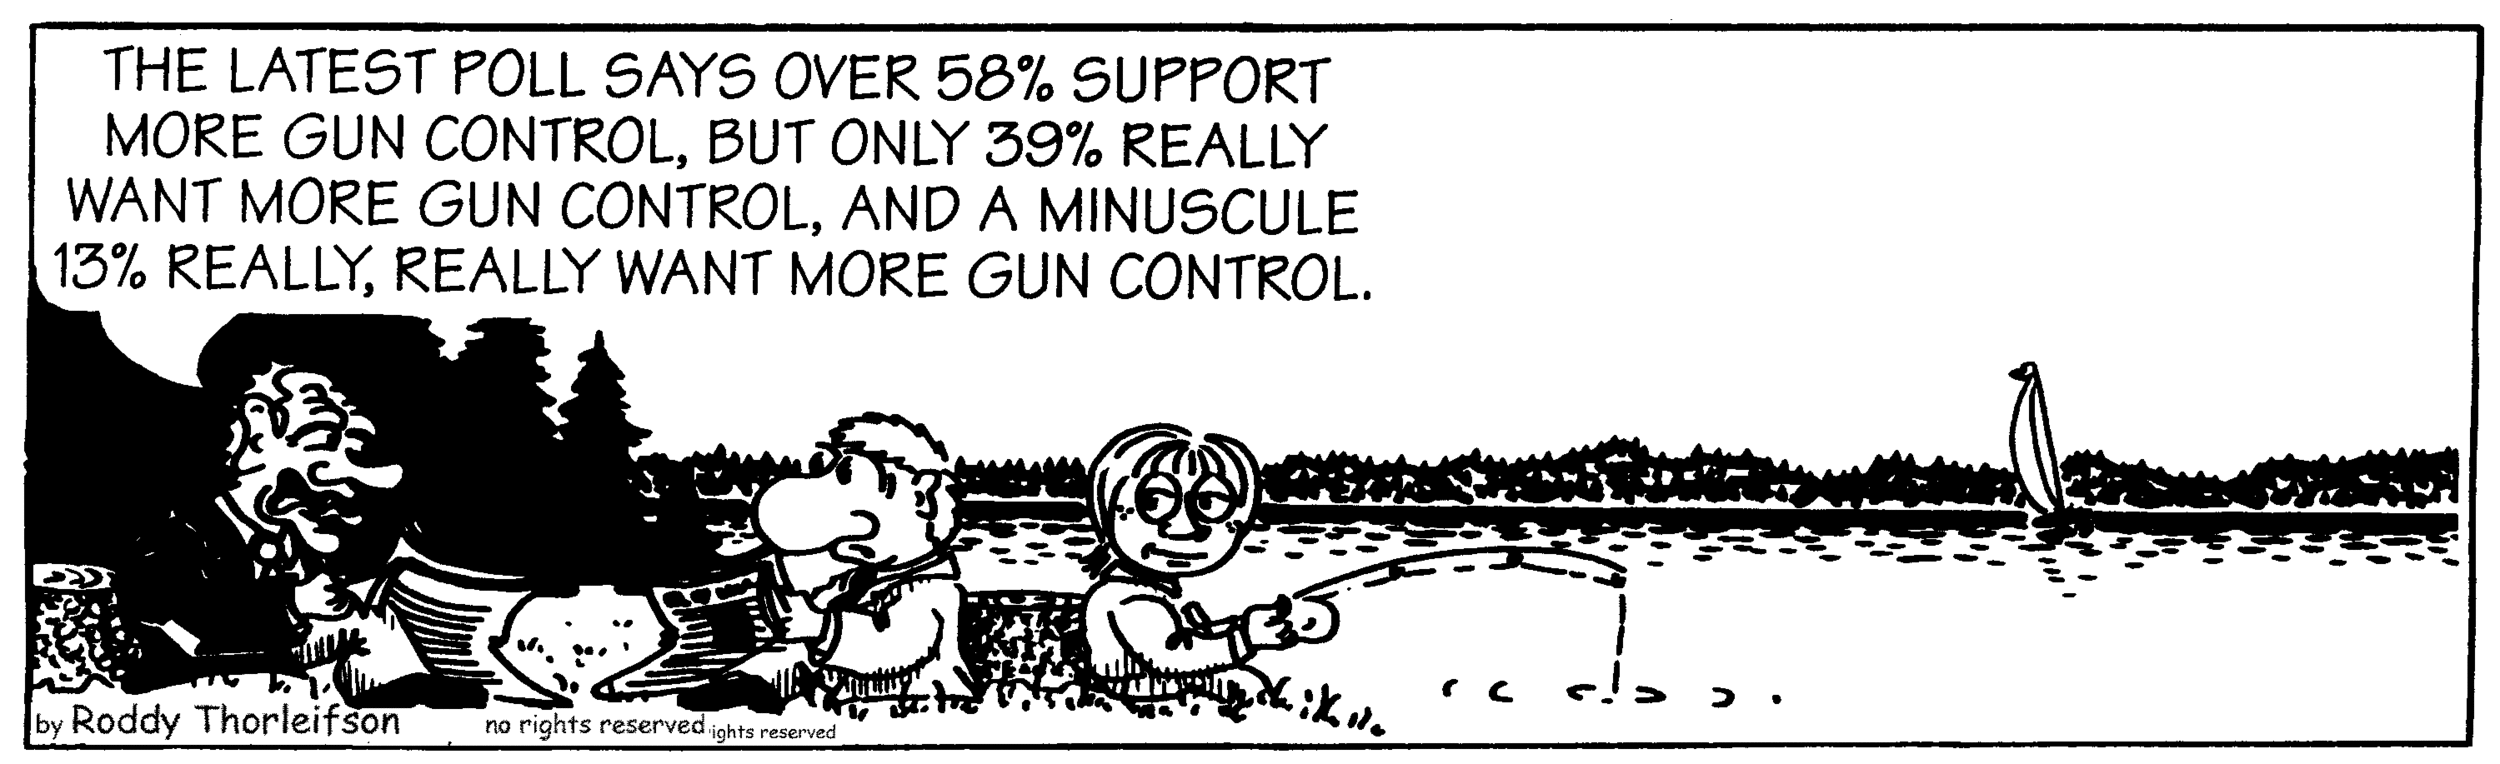 cartoon about polls and gun control